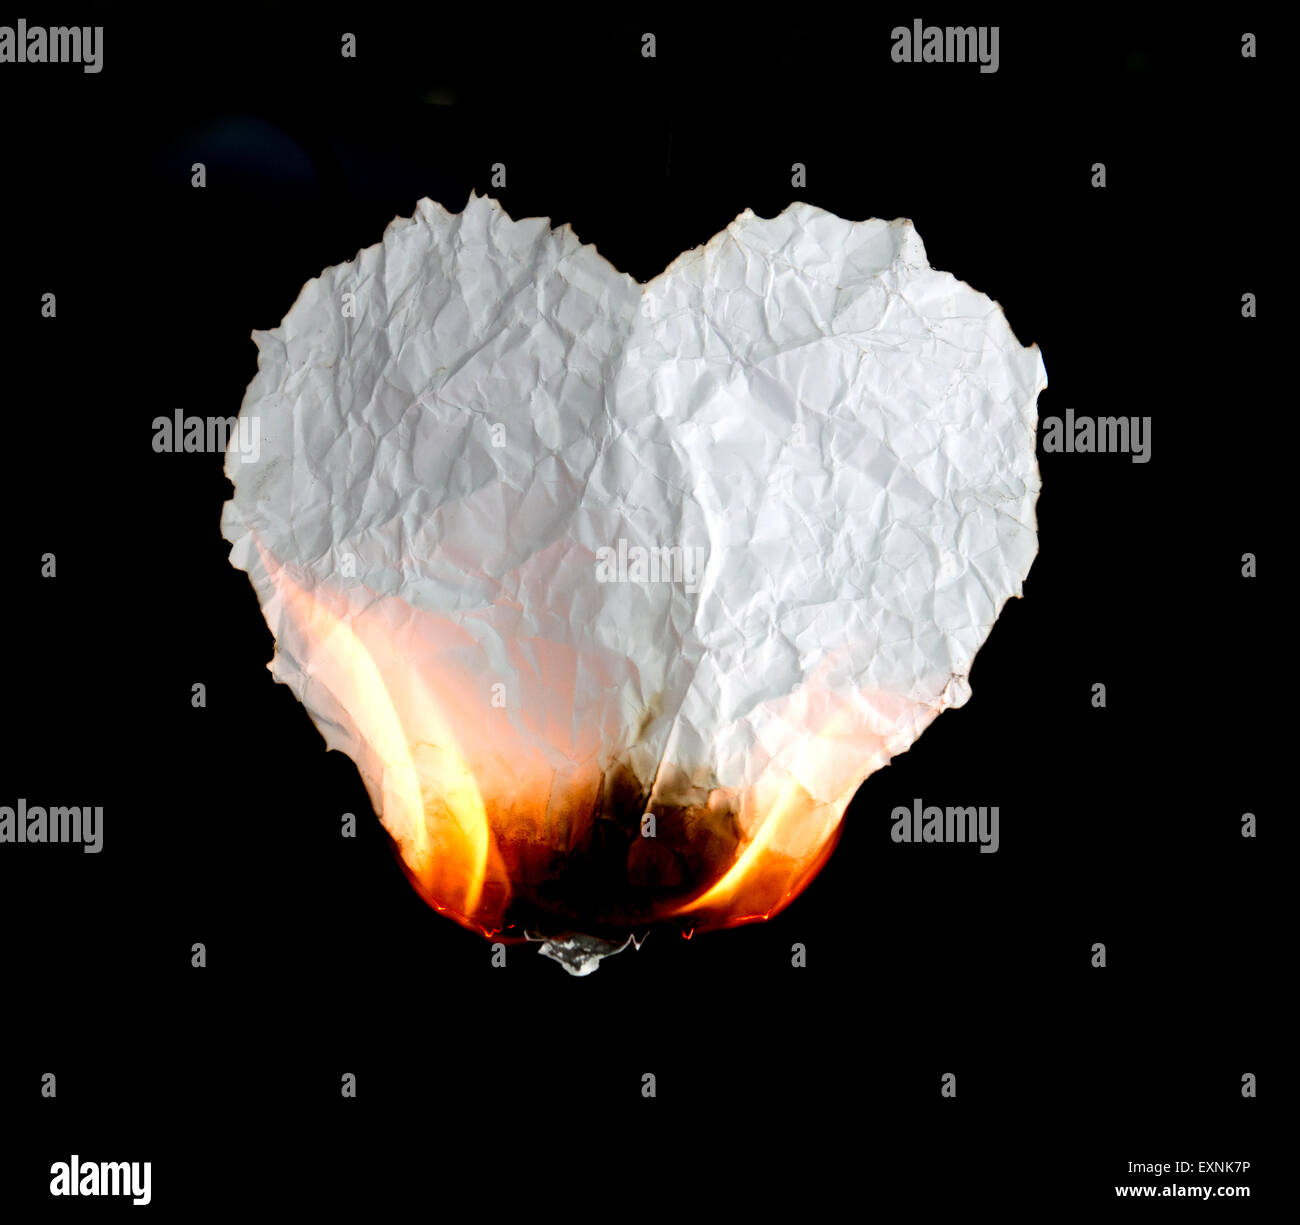 crumpled heart shape paper burning on black background Stock Photo